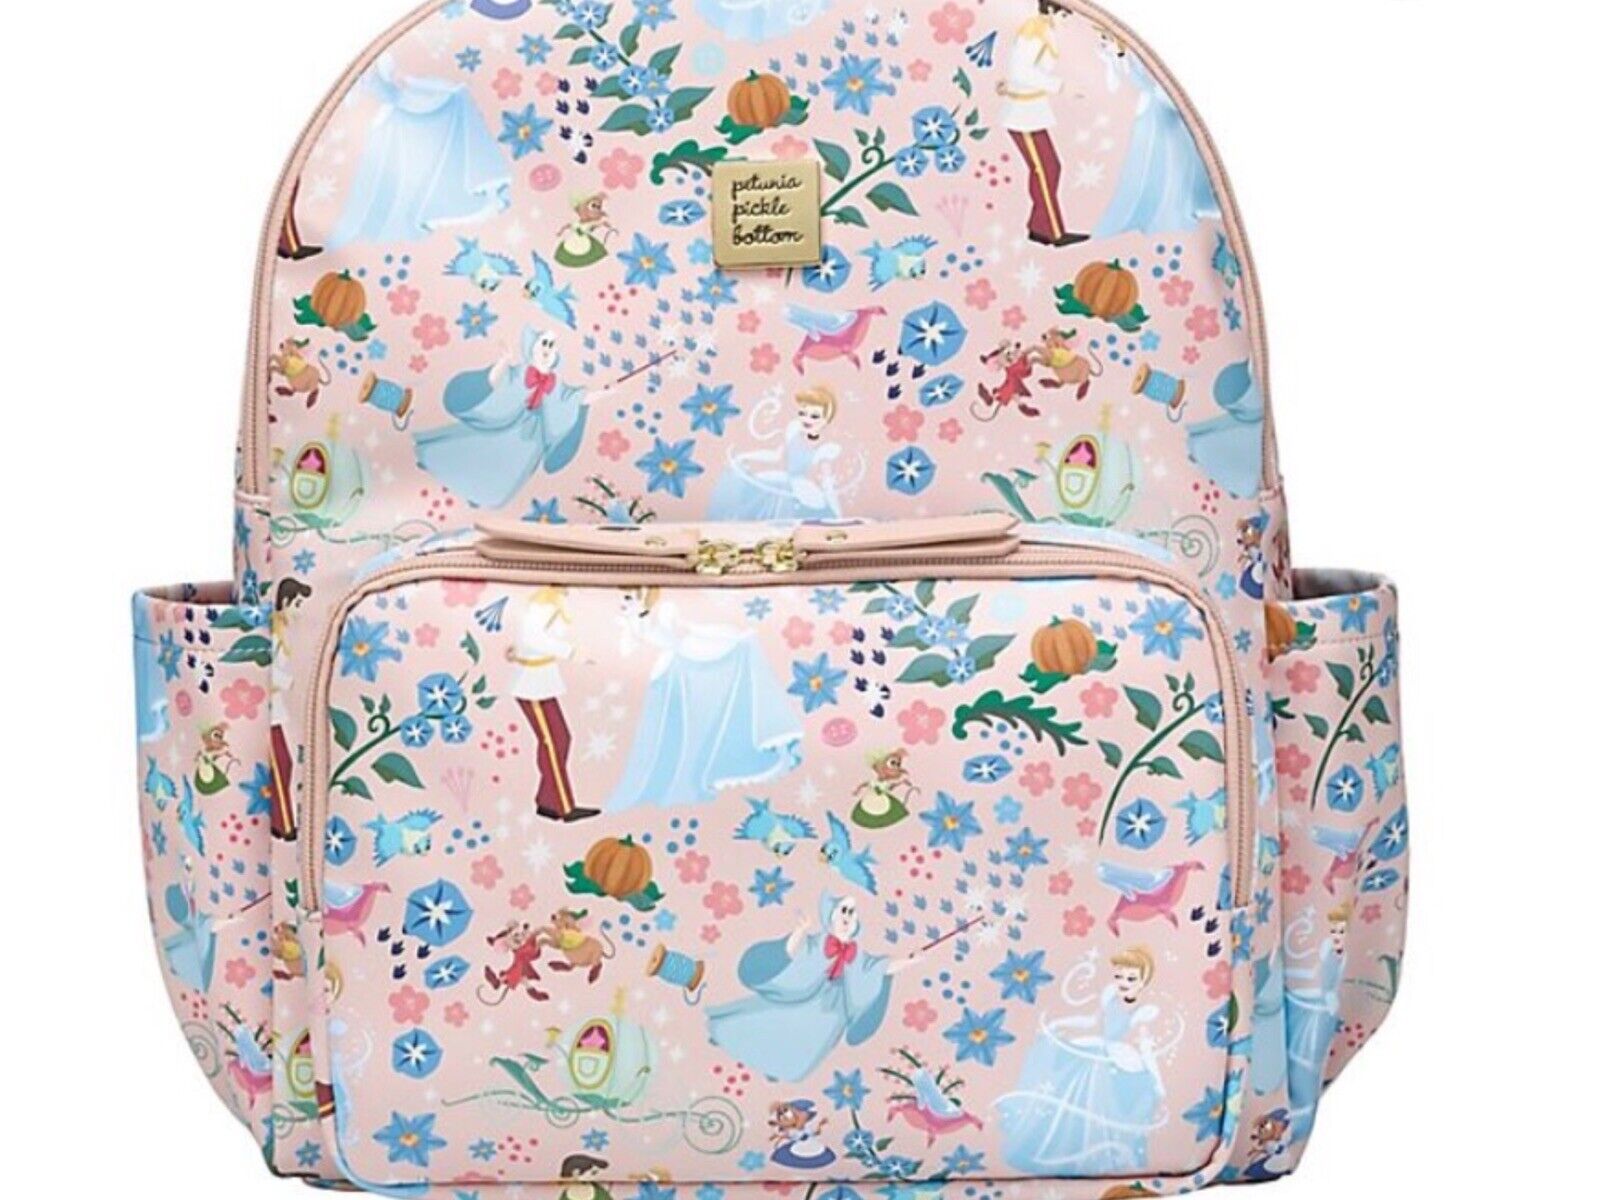 Petunia Picklebottom Cinderella Disney Luxury goods Diaper Holde Bag Bottle & Outlet ☆ Free Shipping